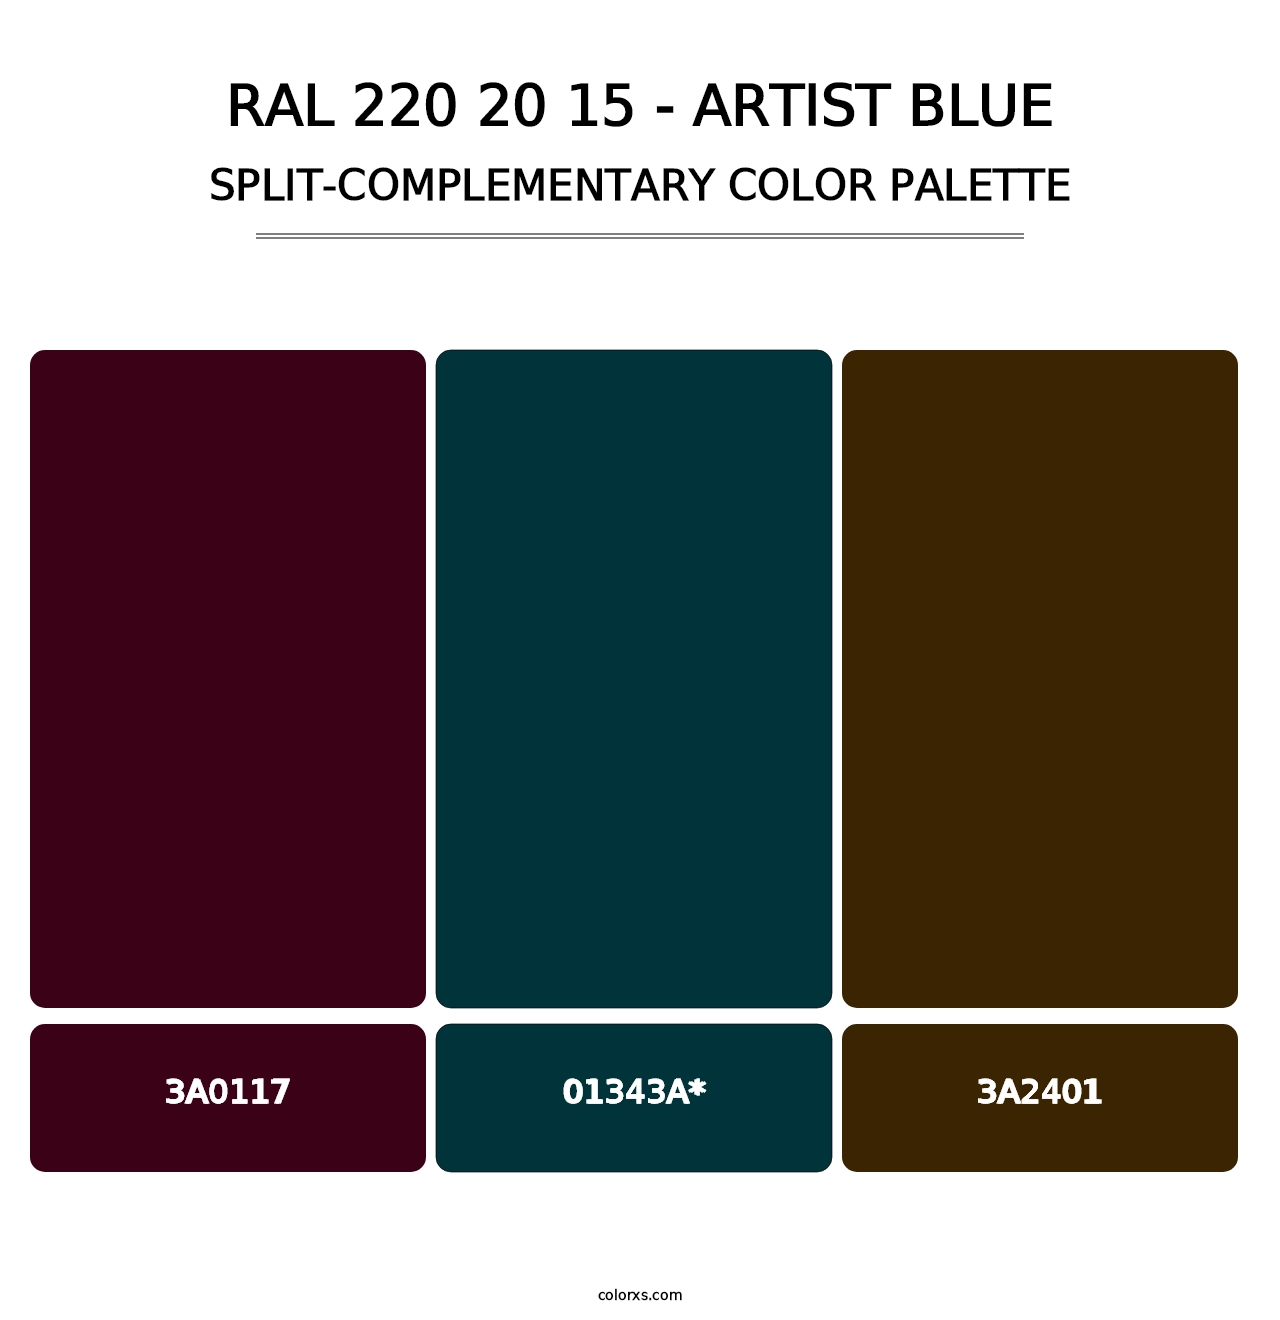 RAL 220 20 15 - Artist Blue - Split-Complementary Color Palette